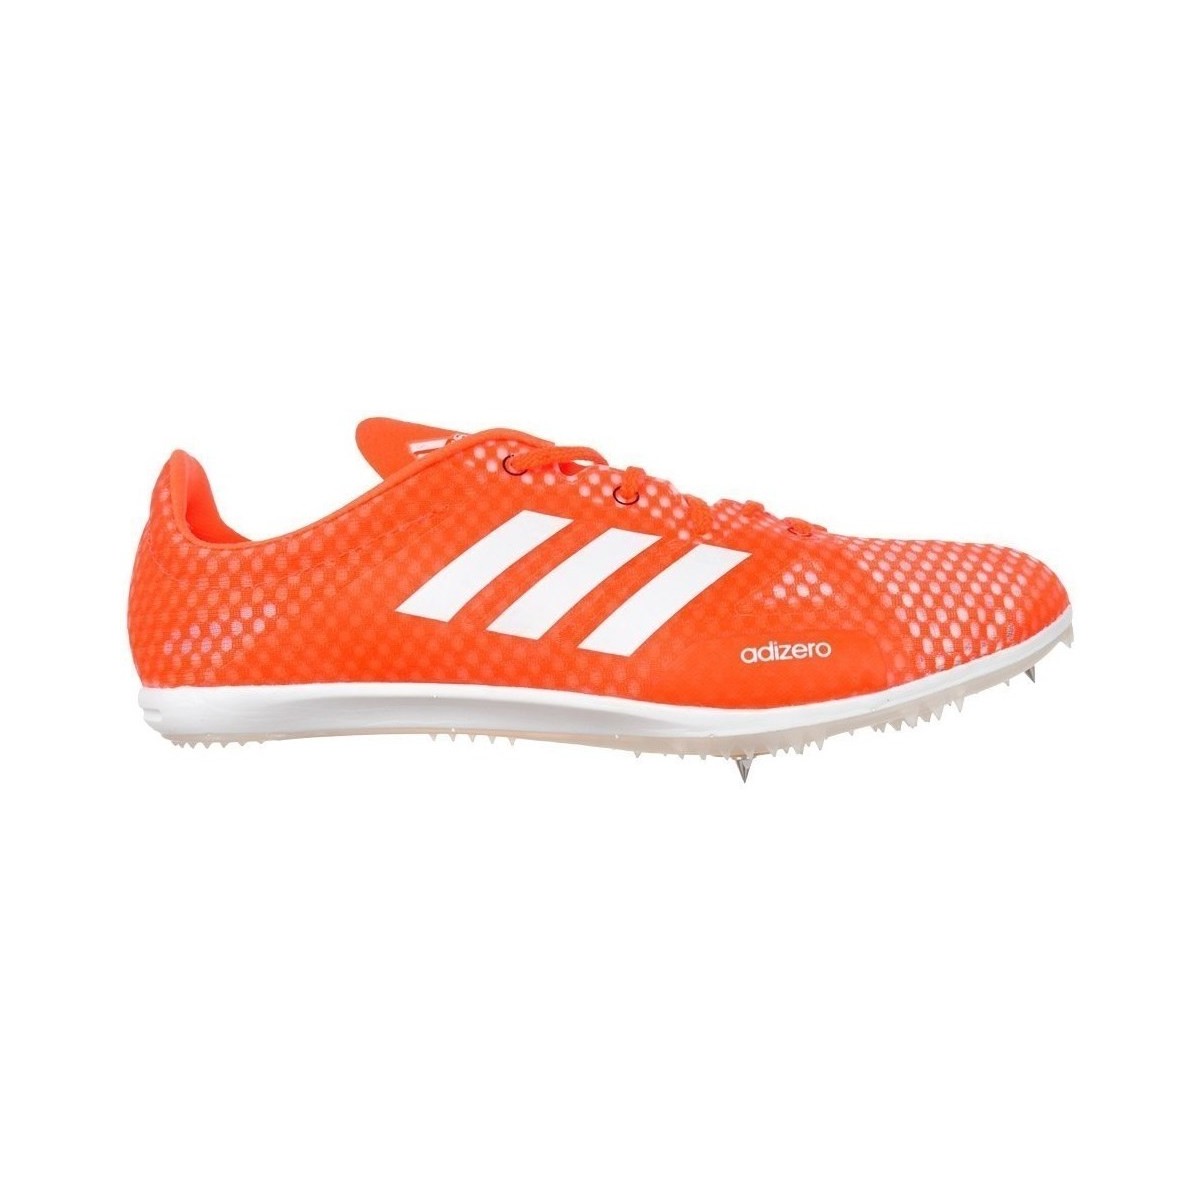 kengät Naiset Juoksukengät / Trail-kengät adidas Originals Adizero Ambition 4 Oranssi